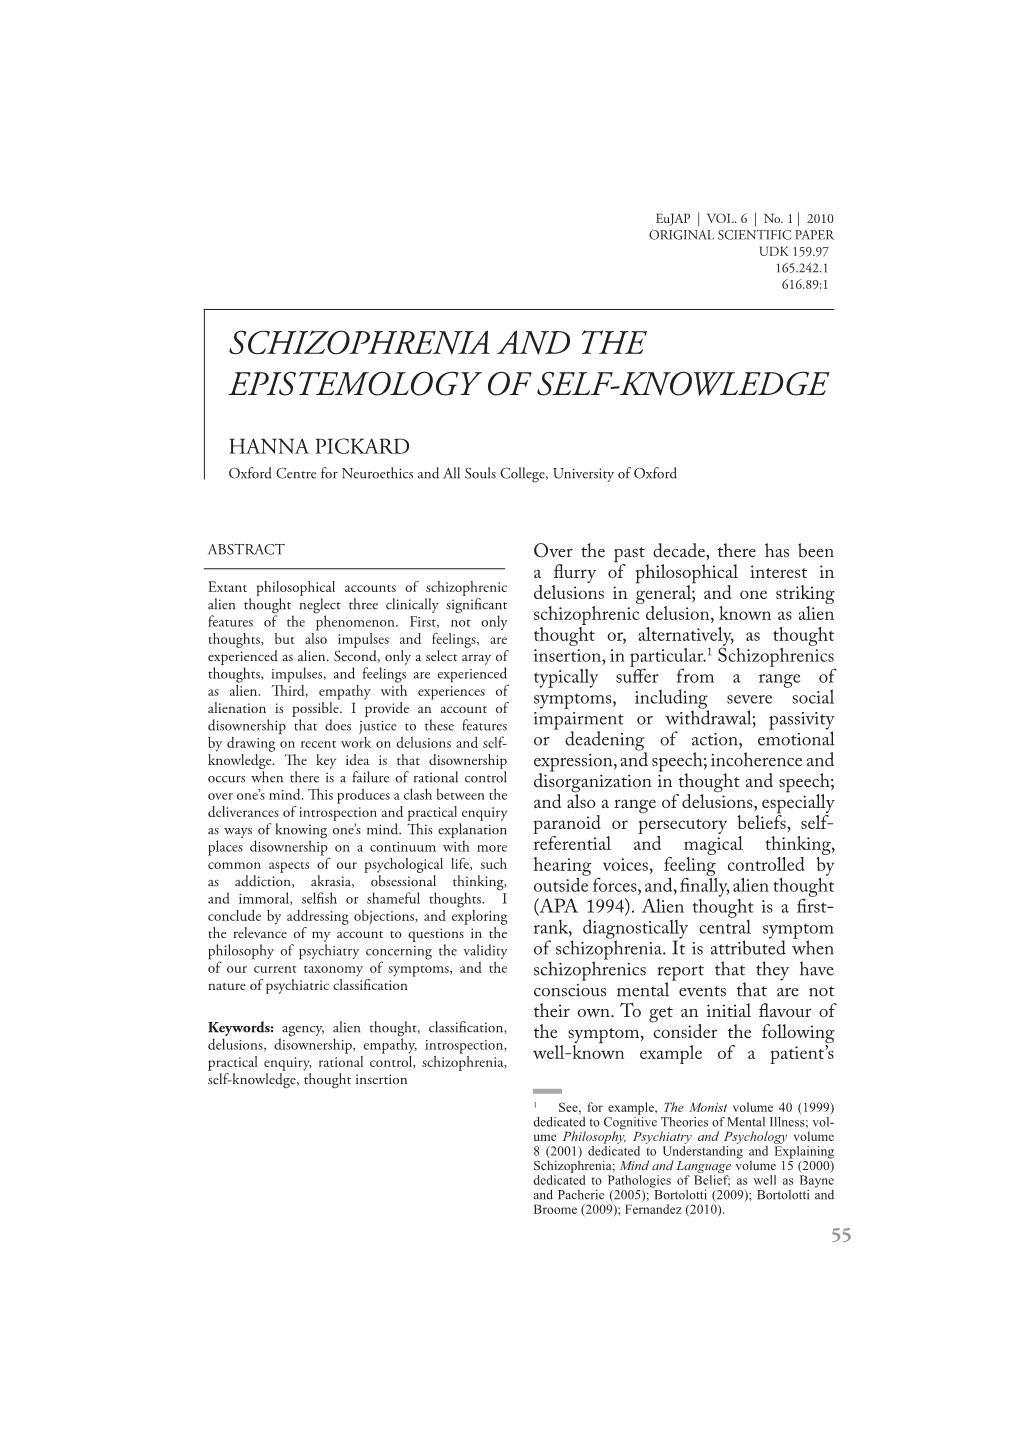 Schizophrenia and the Epistemology of Self-Knowledge